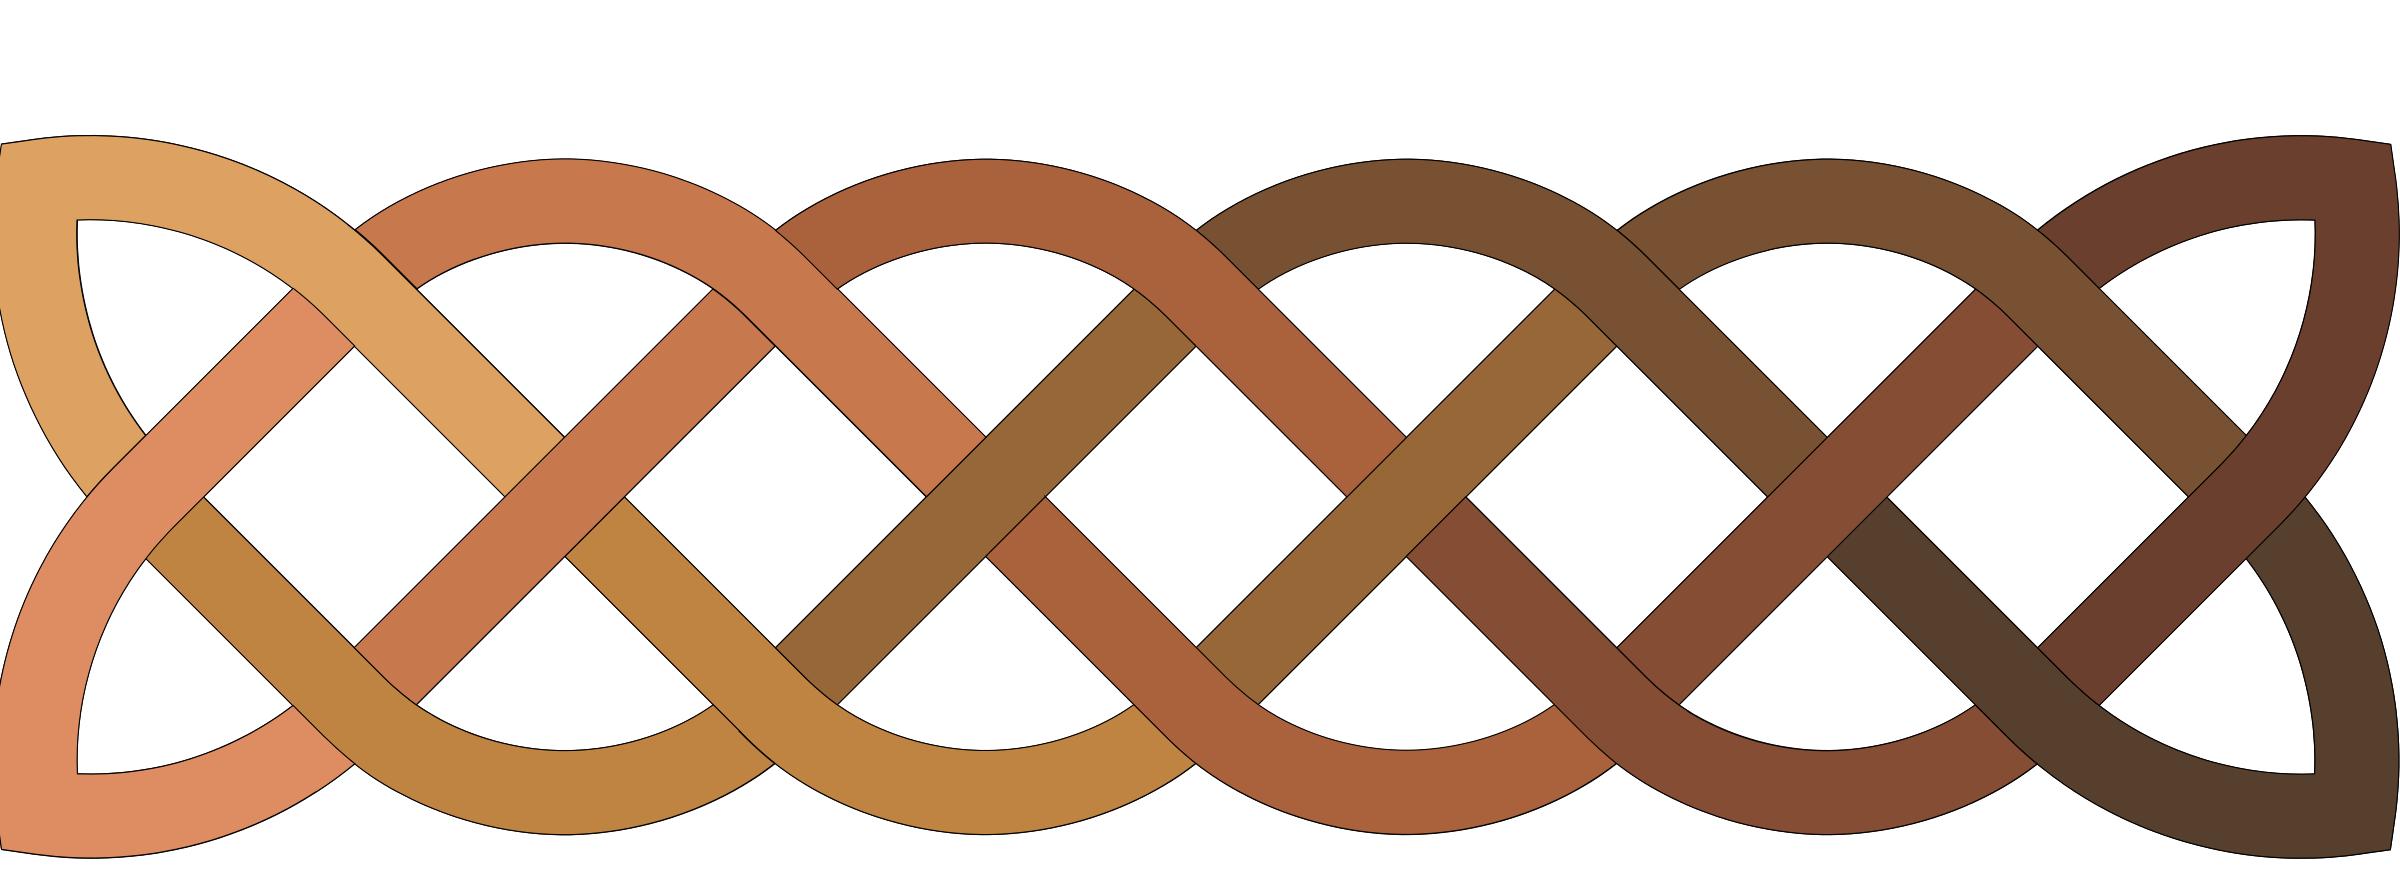 Celtic knot 2D design PNG icons